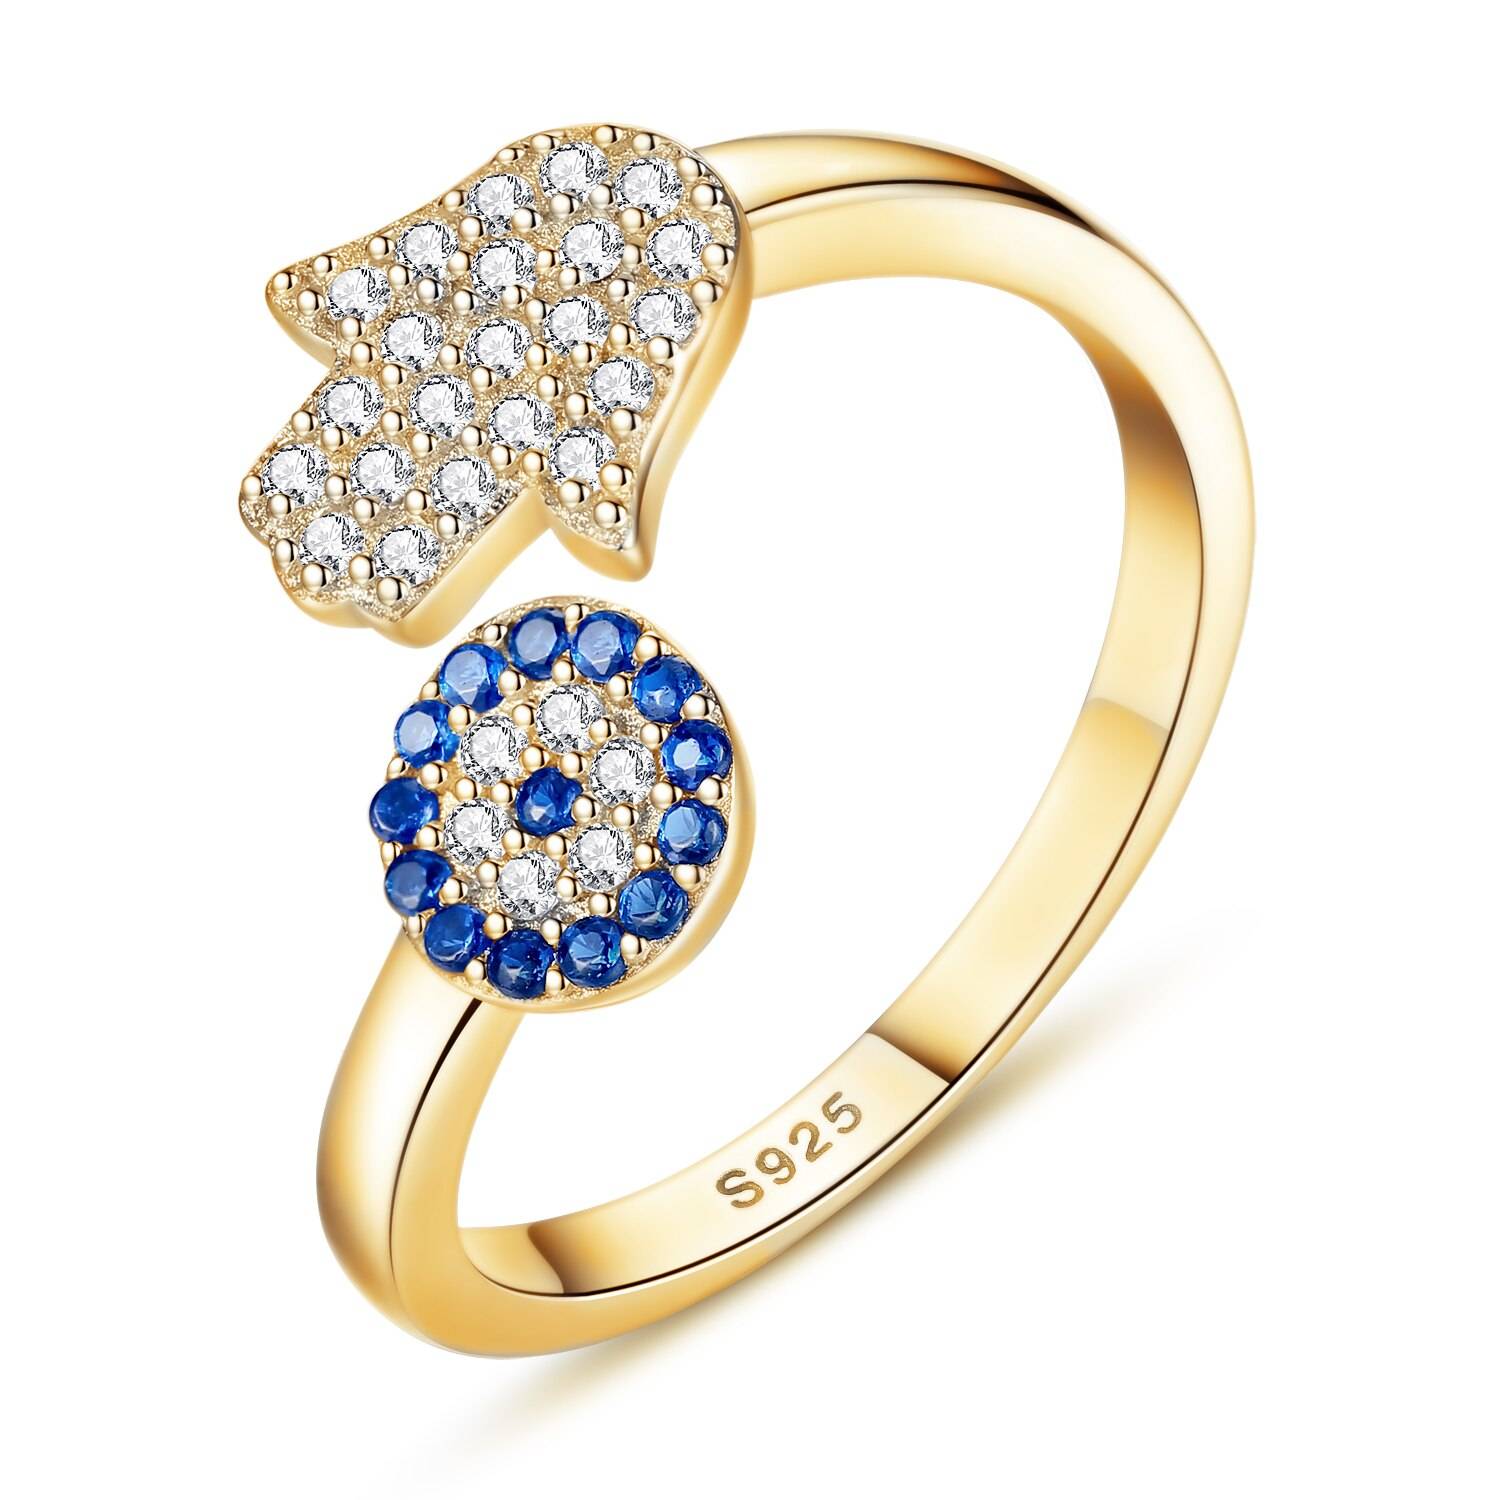 KALETINE 925 Sterling Silver Evil Eye Blue Eye Hamsa Hand Fatima Hand Adjustable Female Rings Open Size Ring Wedding Jewelry Rings